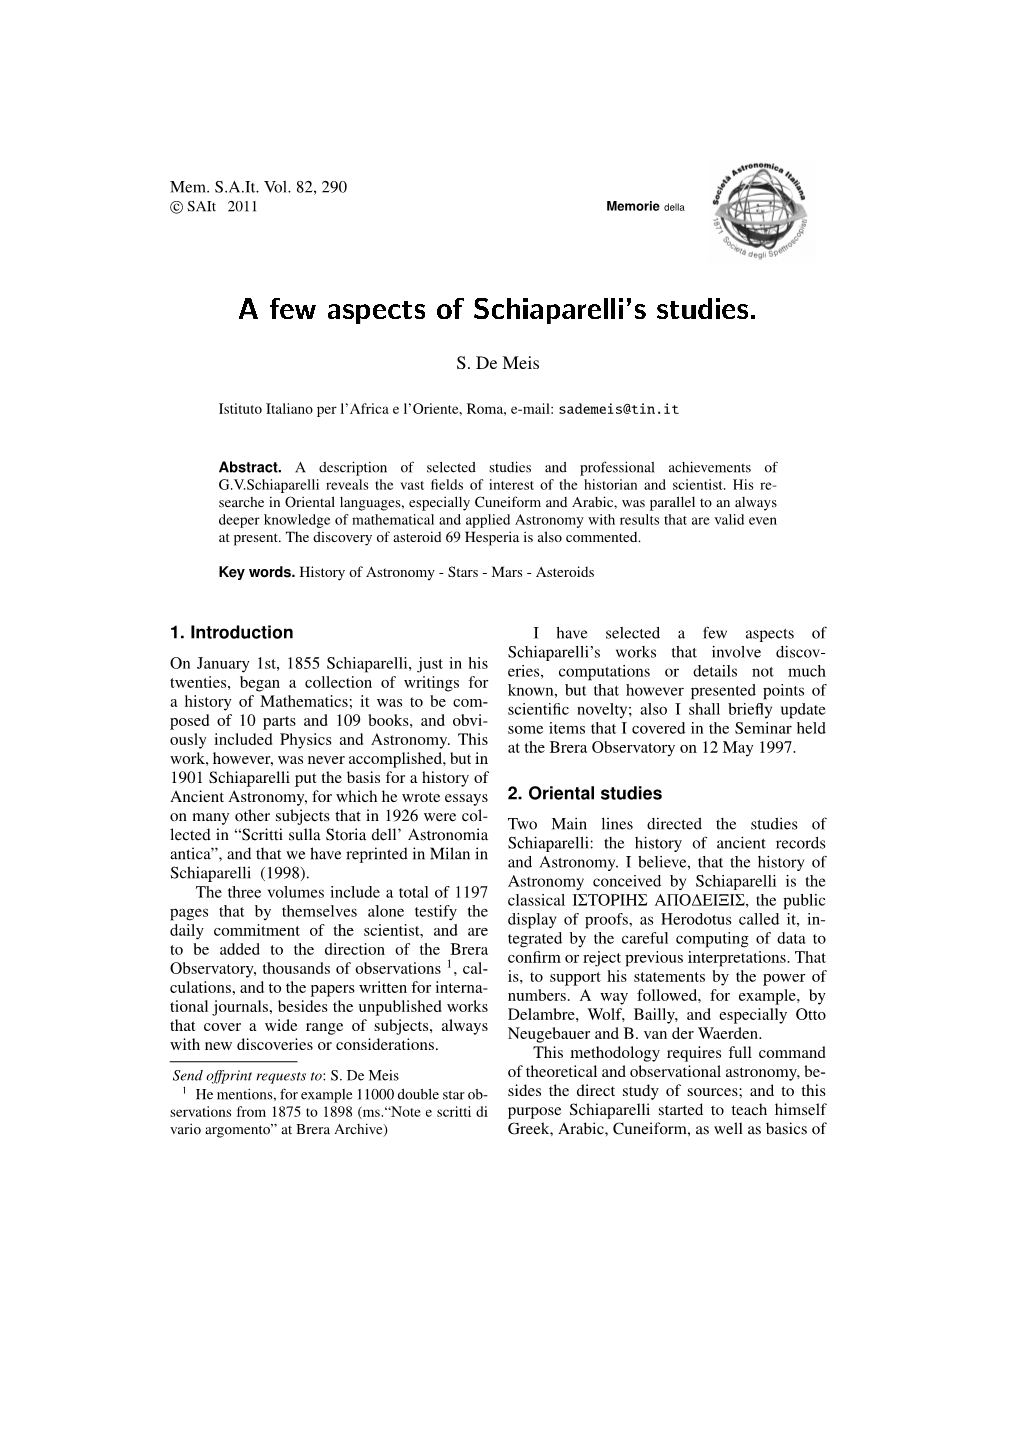 A Few Aspects of Schiaparelli's Studies